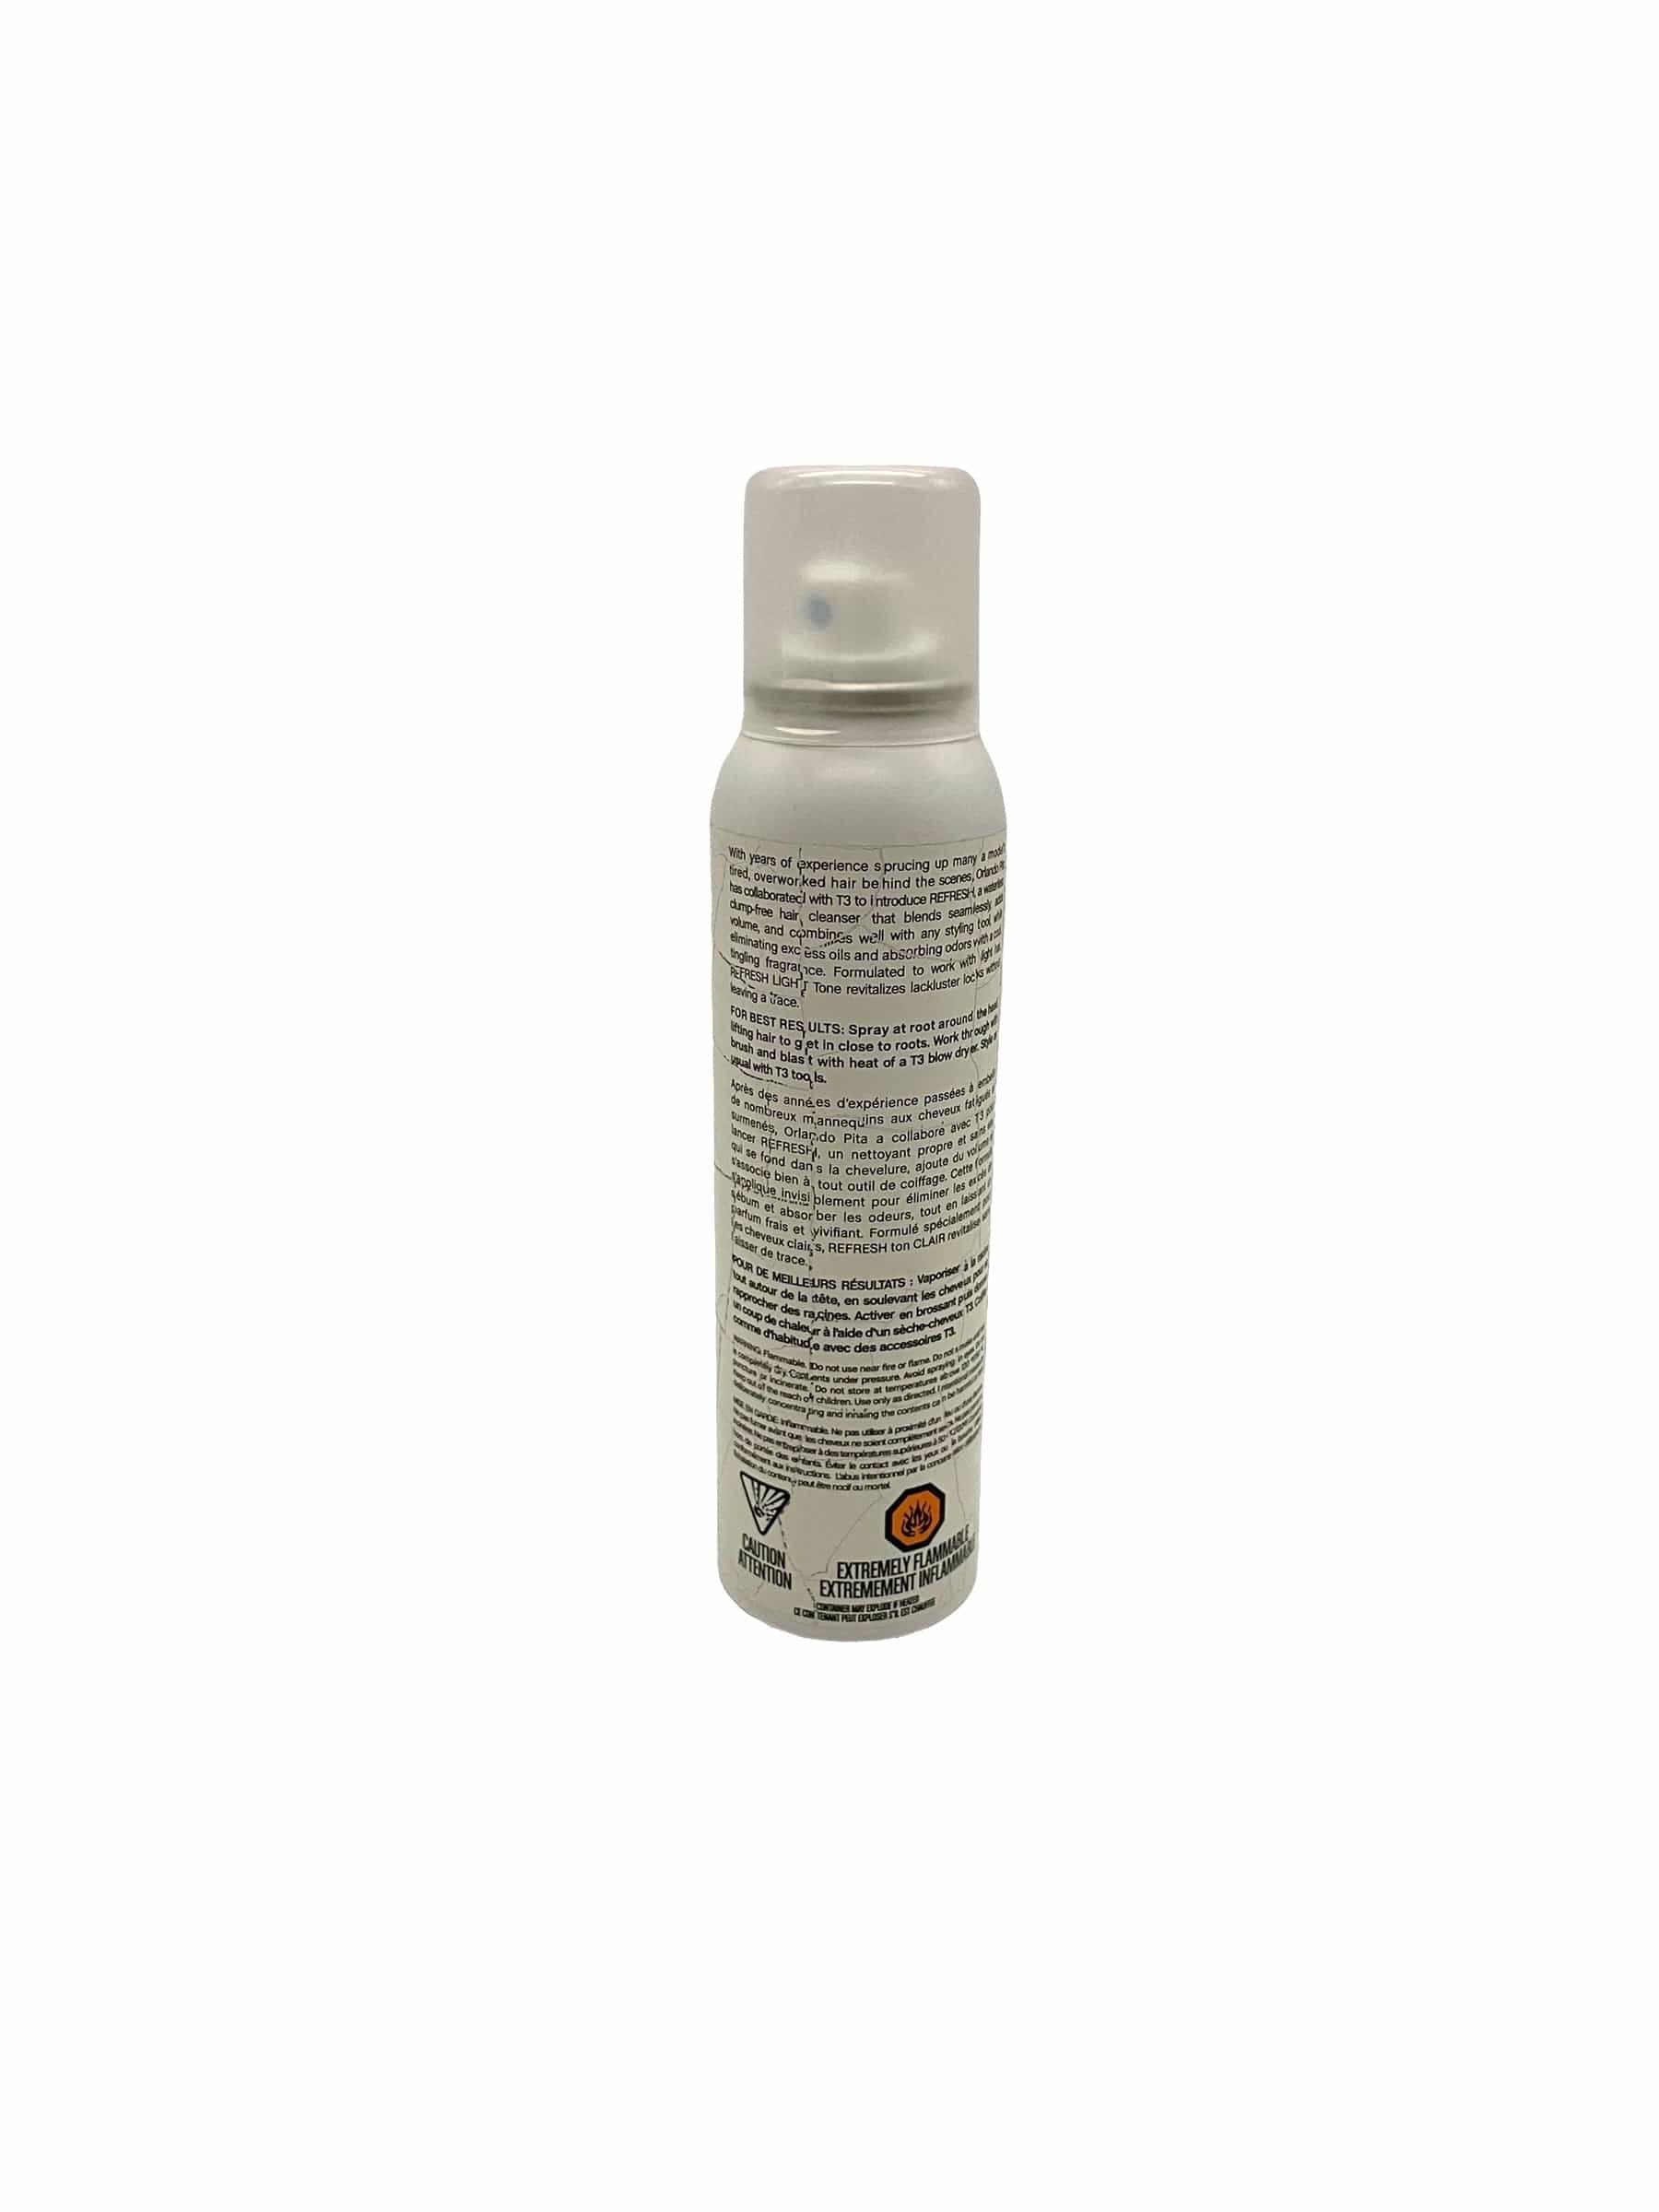 Orlando Pita T3 360 Refresh Volumizing Dry Shampoo Light Tone 3.3oz Dry Shampoo